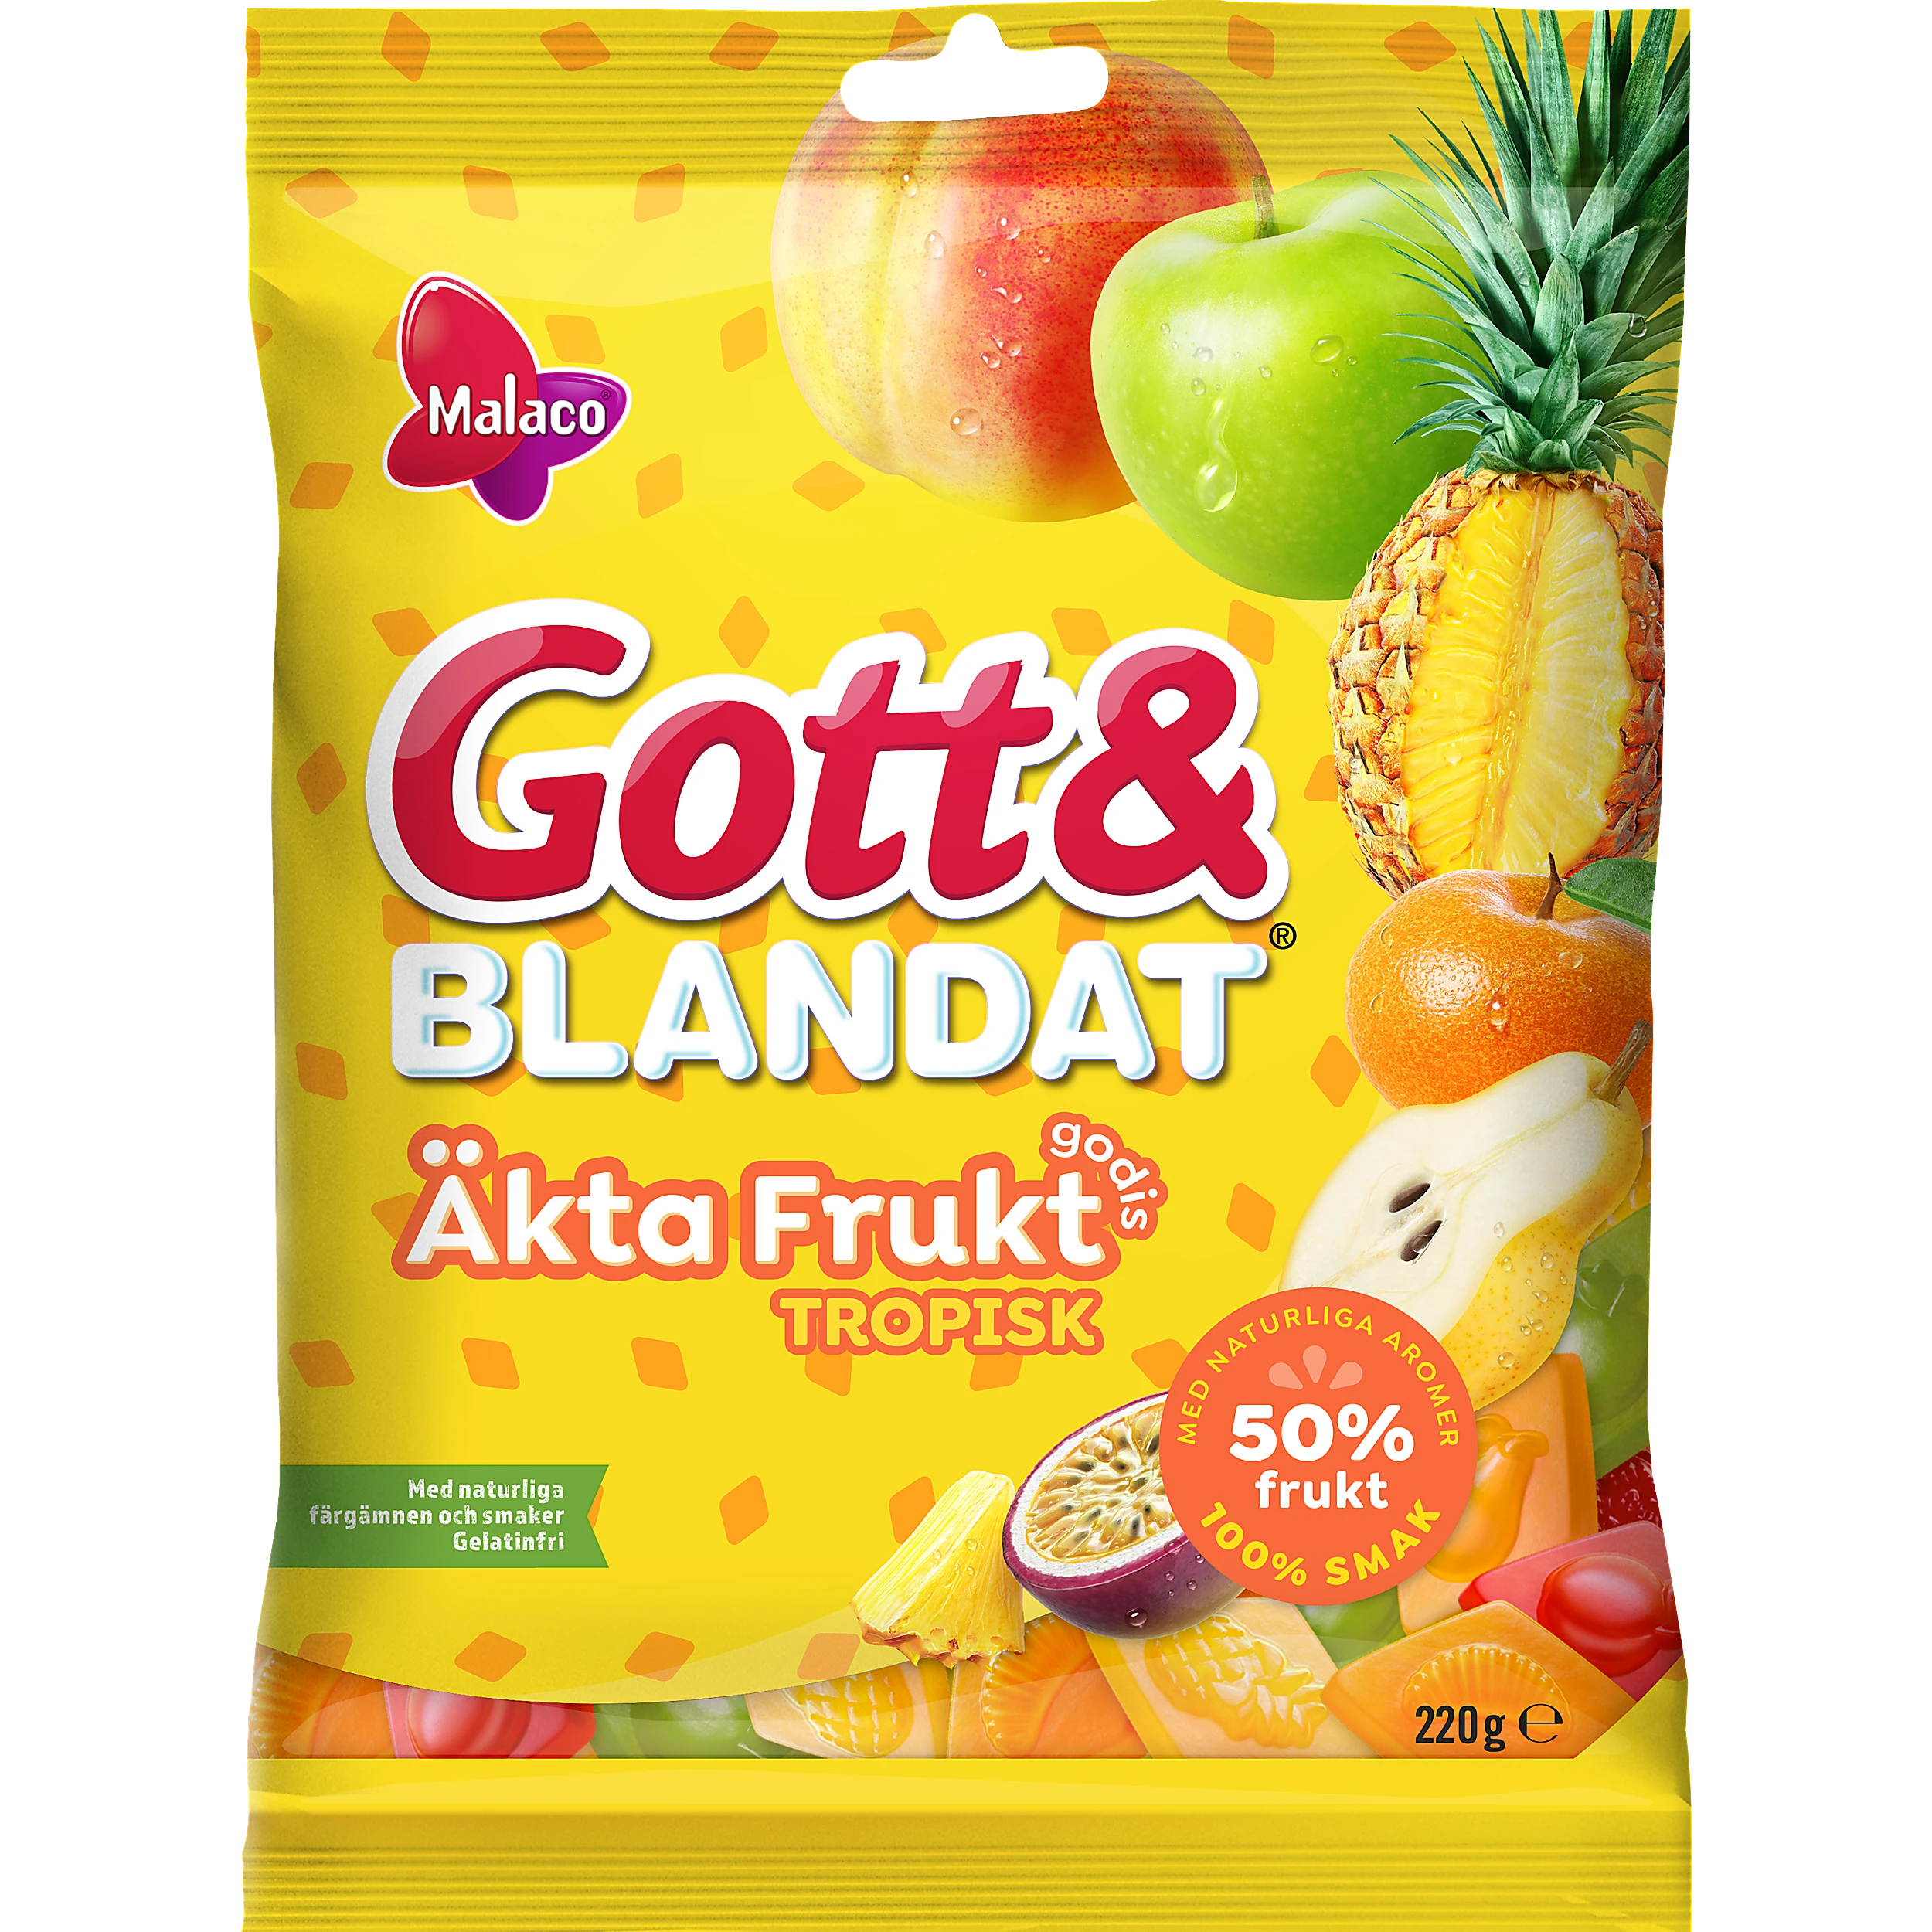 Malaco Gott & Blandat "Real Fruit-Candy" Tropical by Sweet Side of Sweden